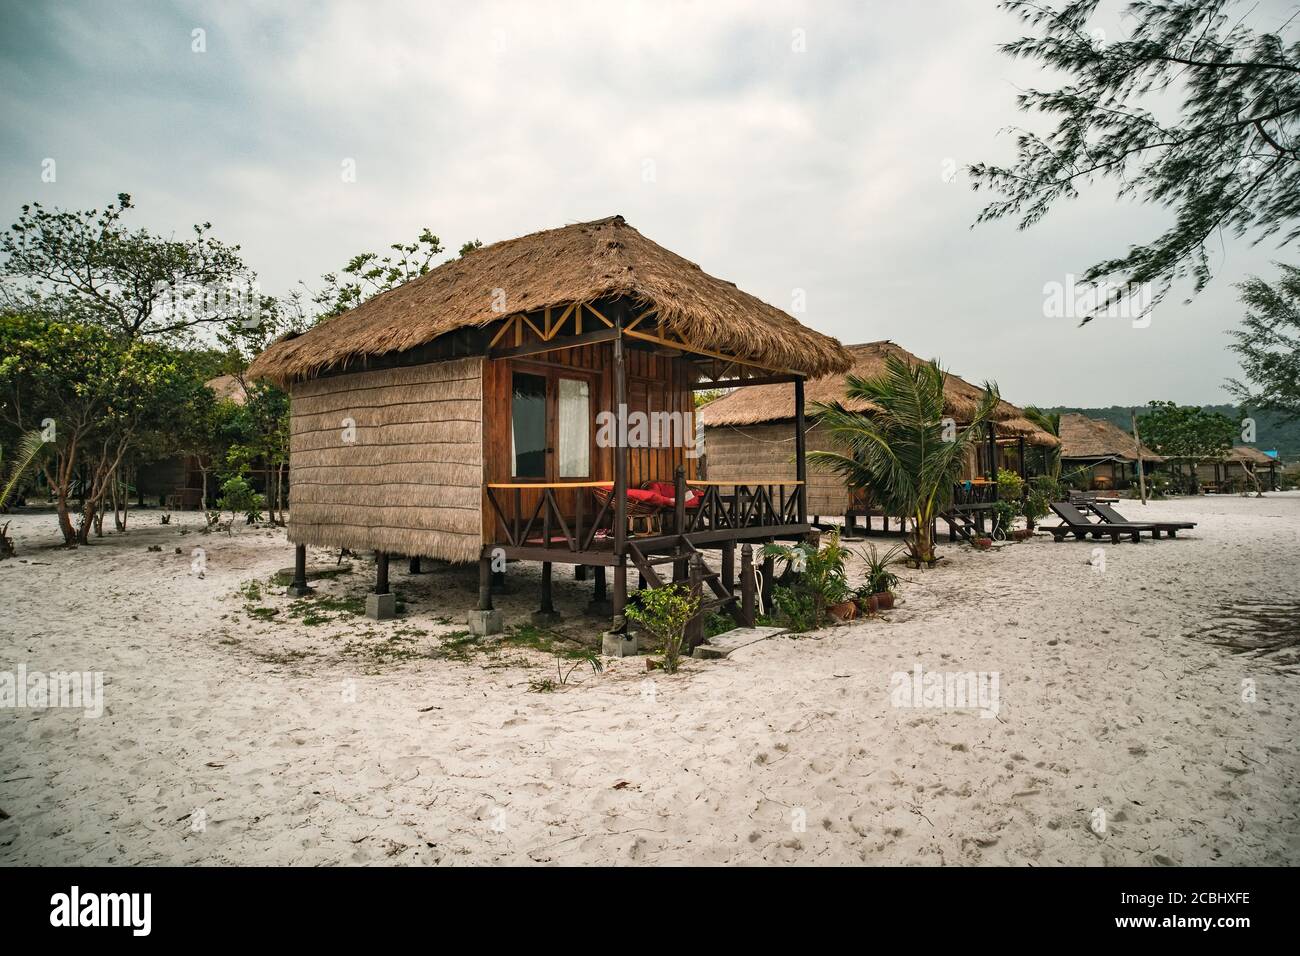 cheap budget accommodation on the beach, bamboo huts Stock Photo